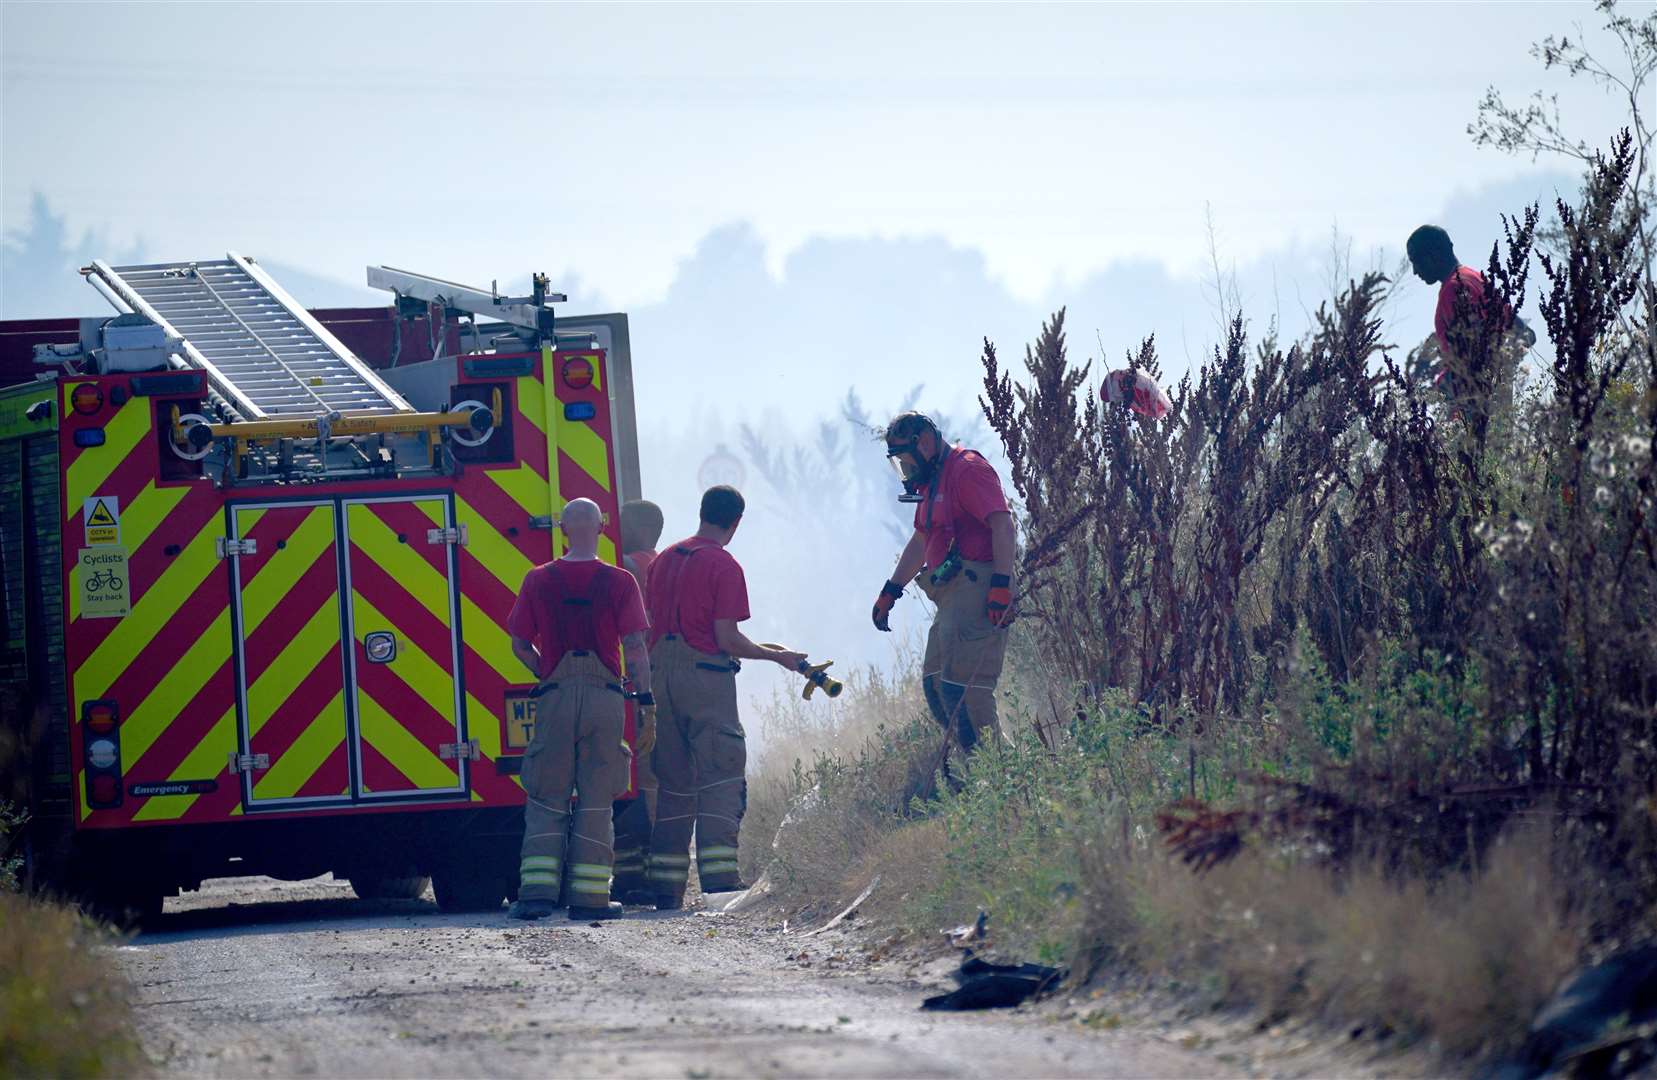 Firefighters tackle a blaze in the village of Wennington, east London (Yui Mok/PA)